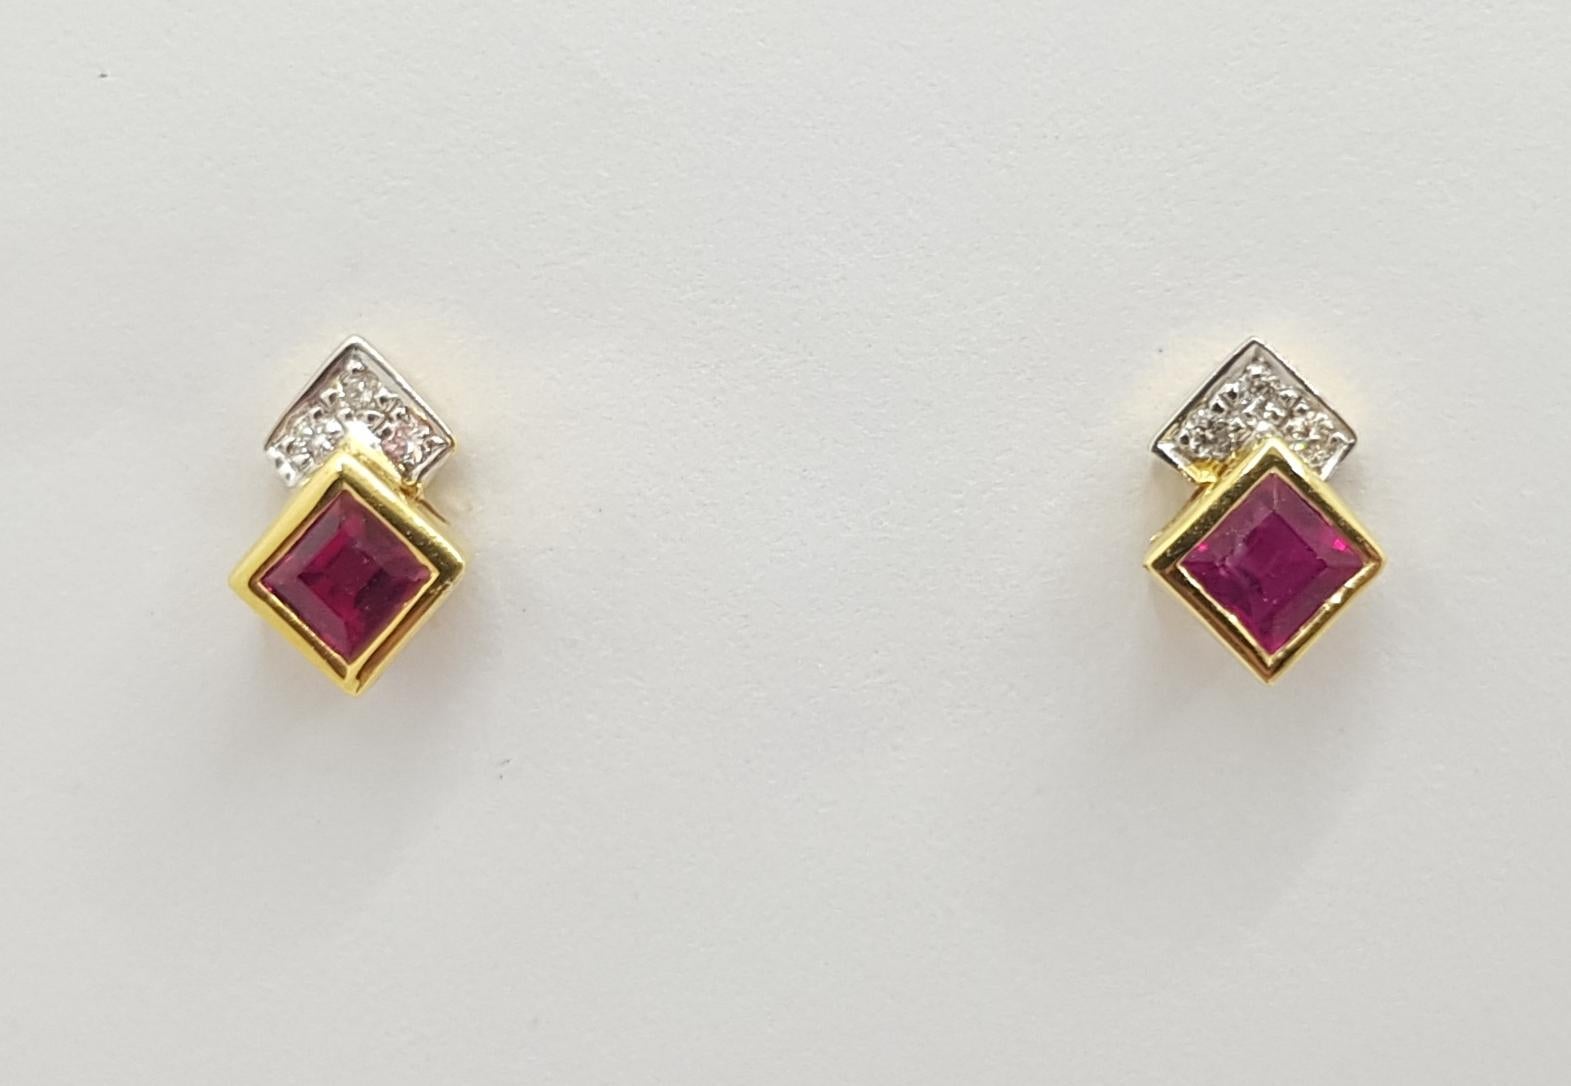 Ruby 0.68 carat with Diamond 0.05 carat Earrings set in 18 Karat Gold Settings

Width:  0.6 cm 
Length:  0.9 cm
Total Weight: 2.34 grams

